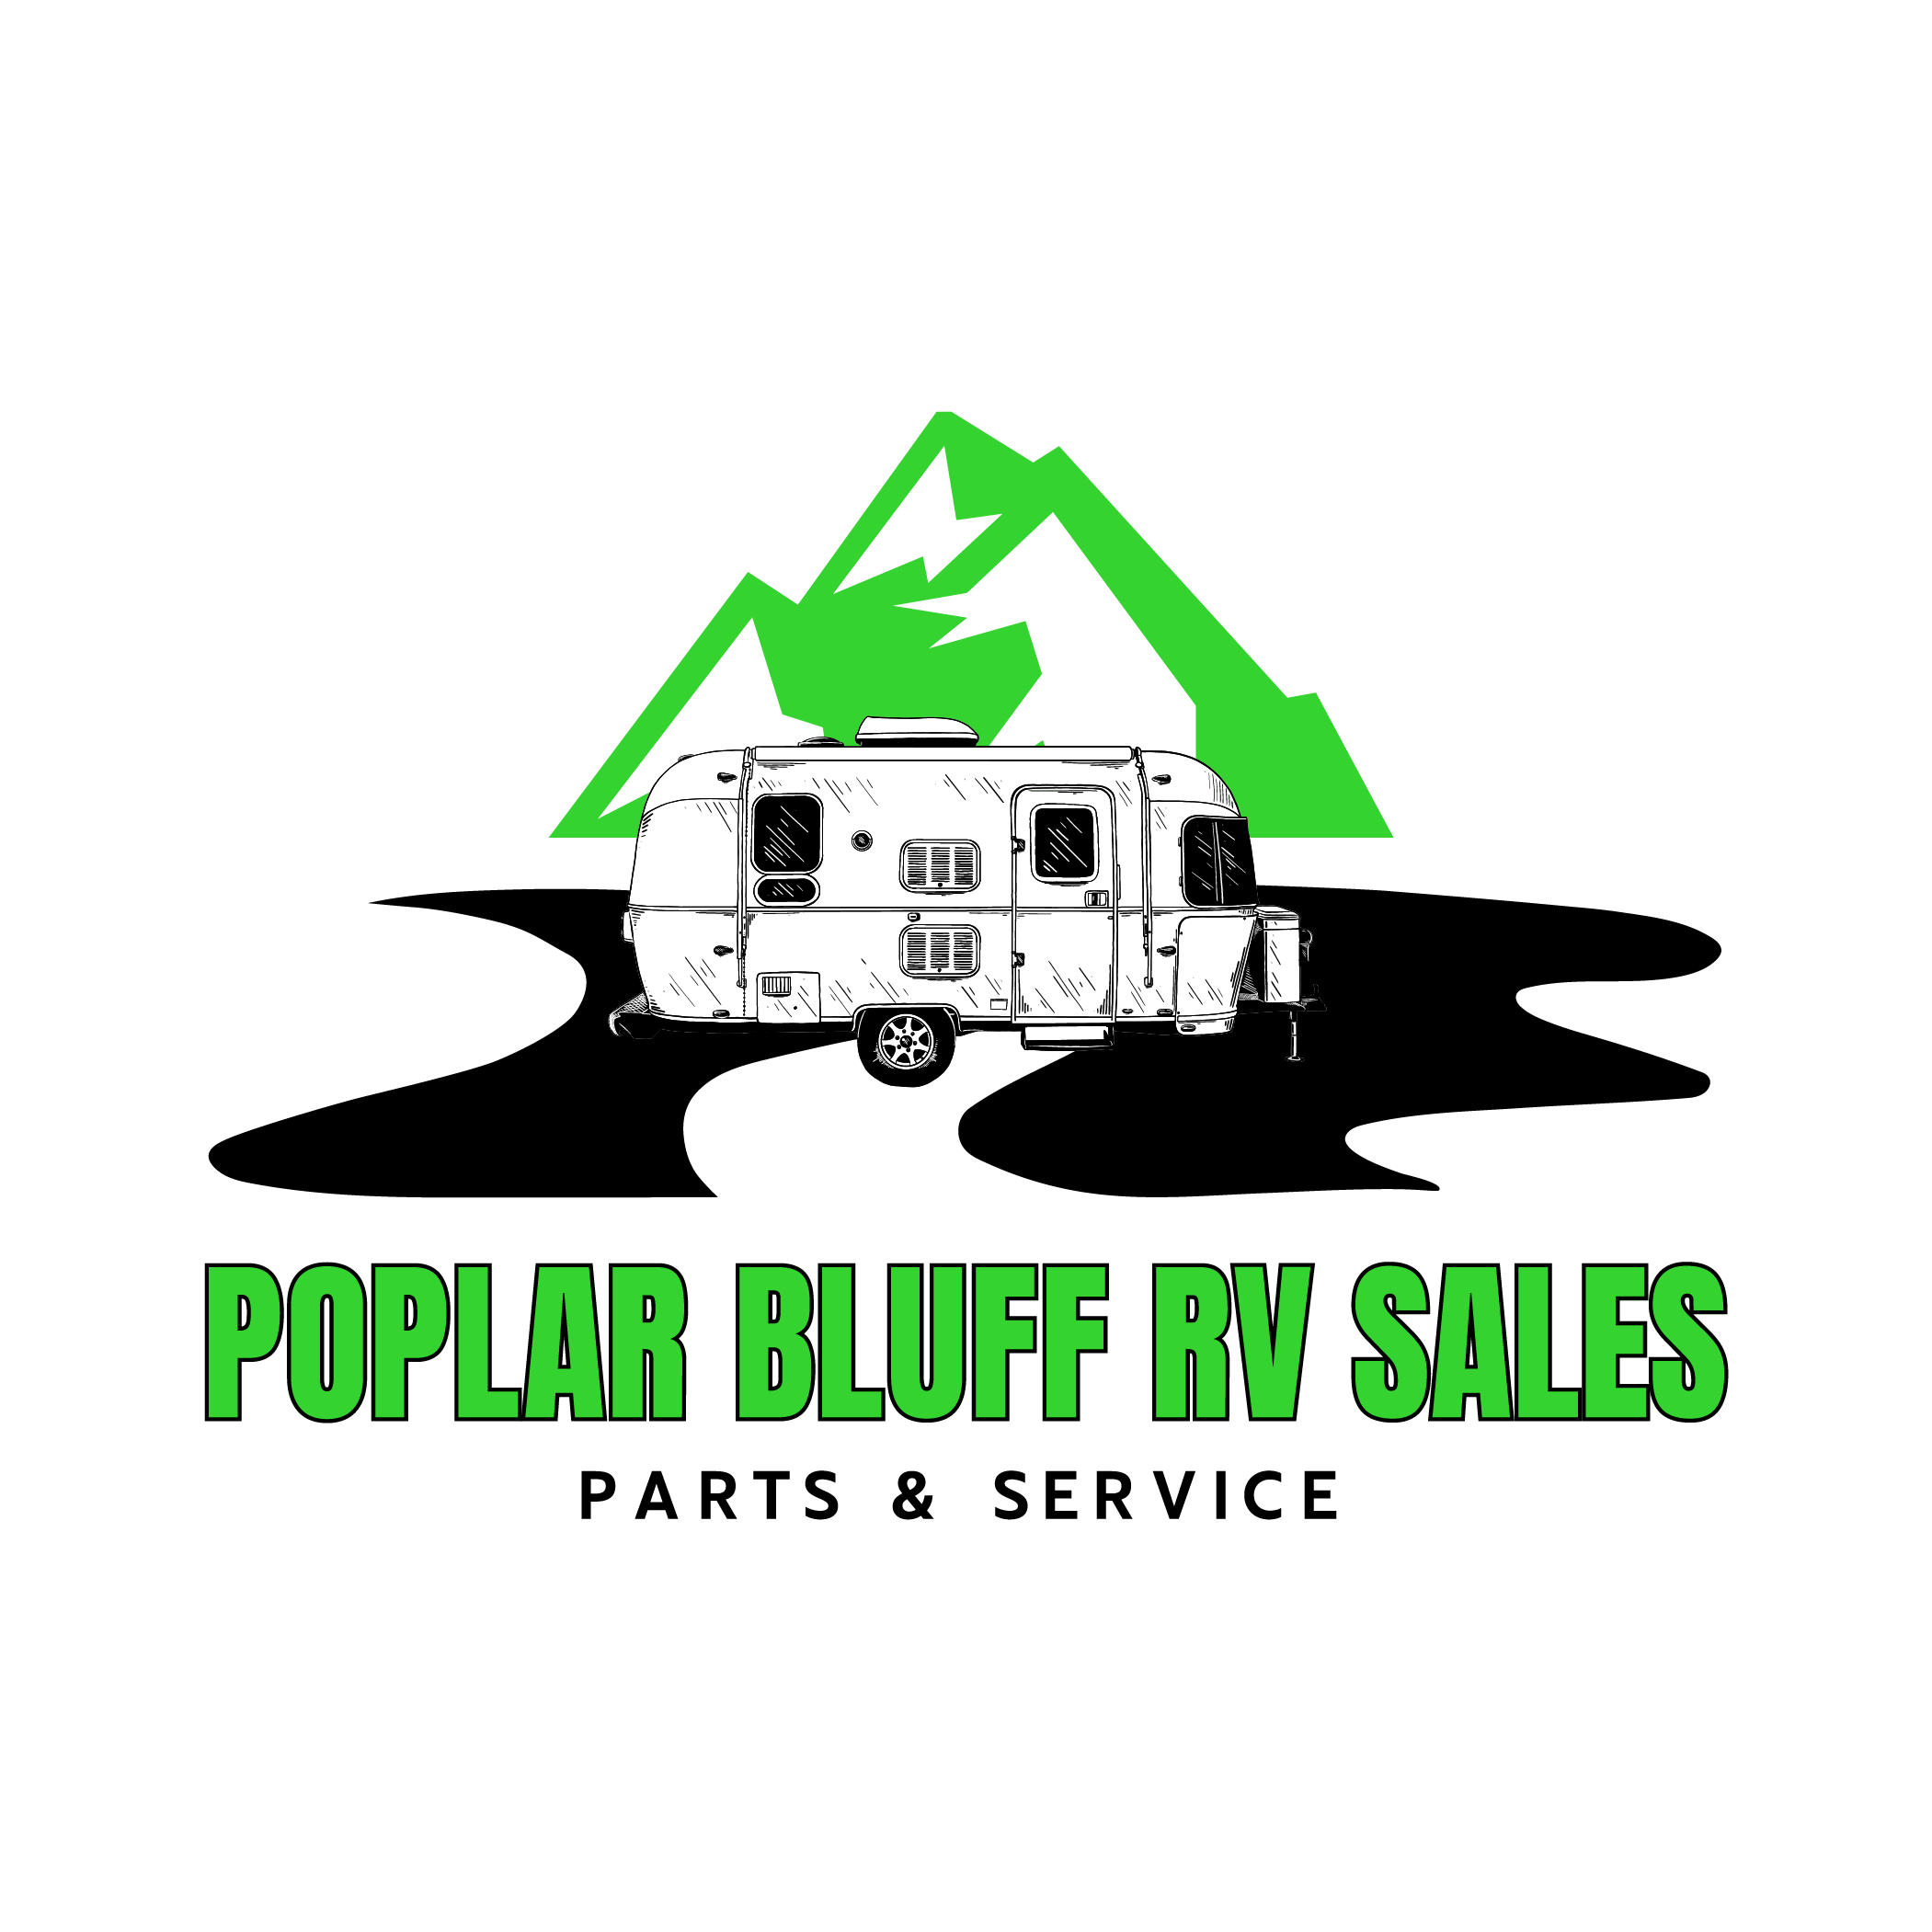 POPLAR BLUFF RV SALES, PARTS, &amp; SERVICE